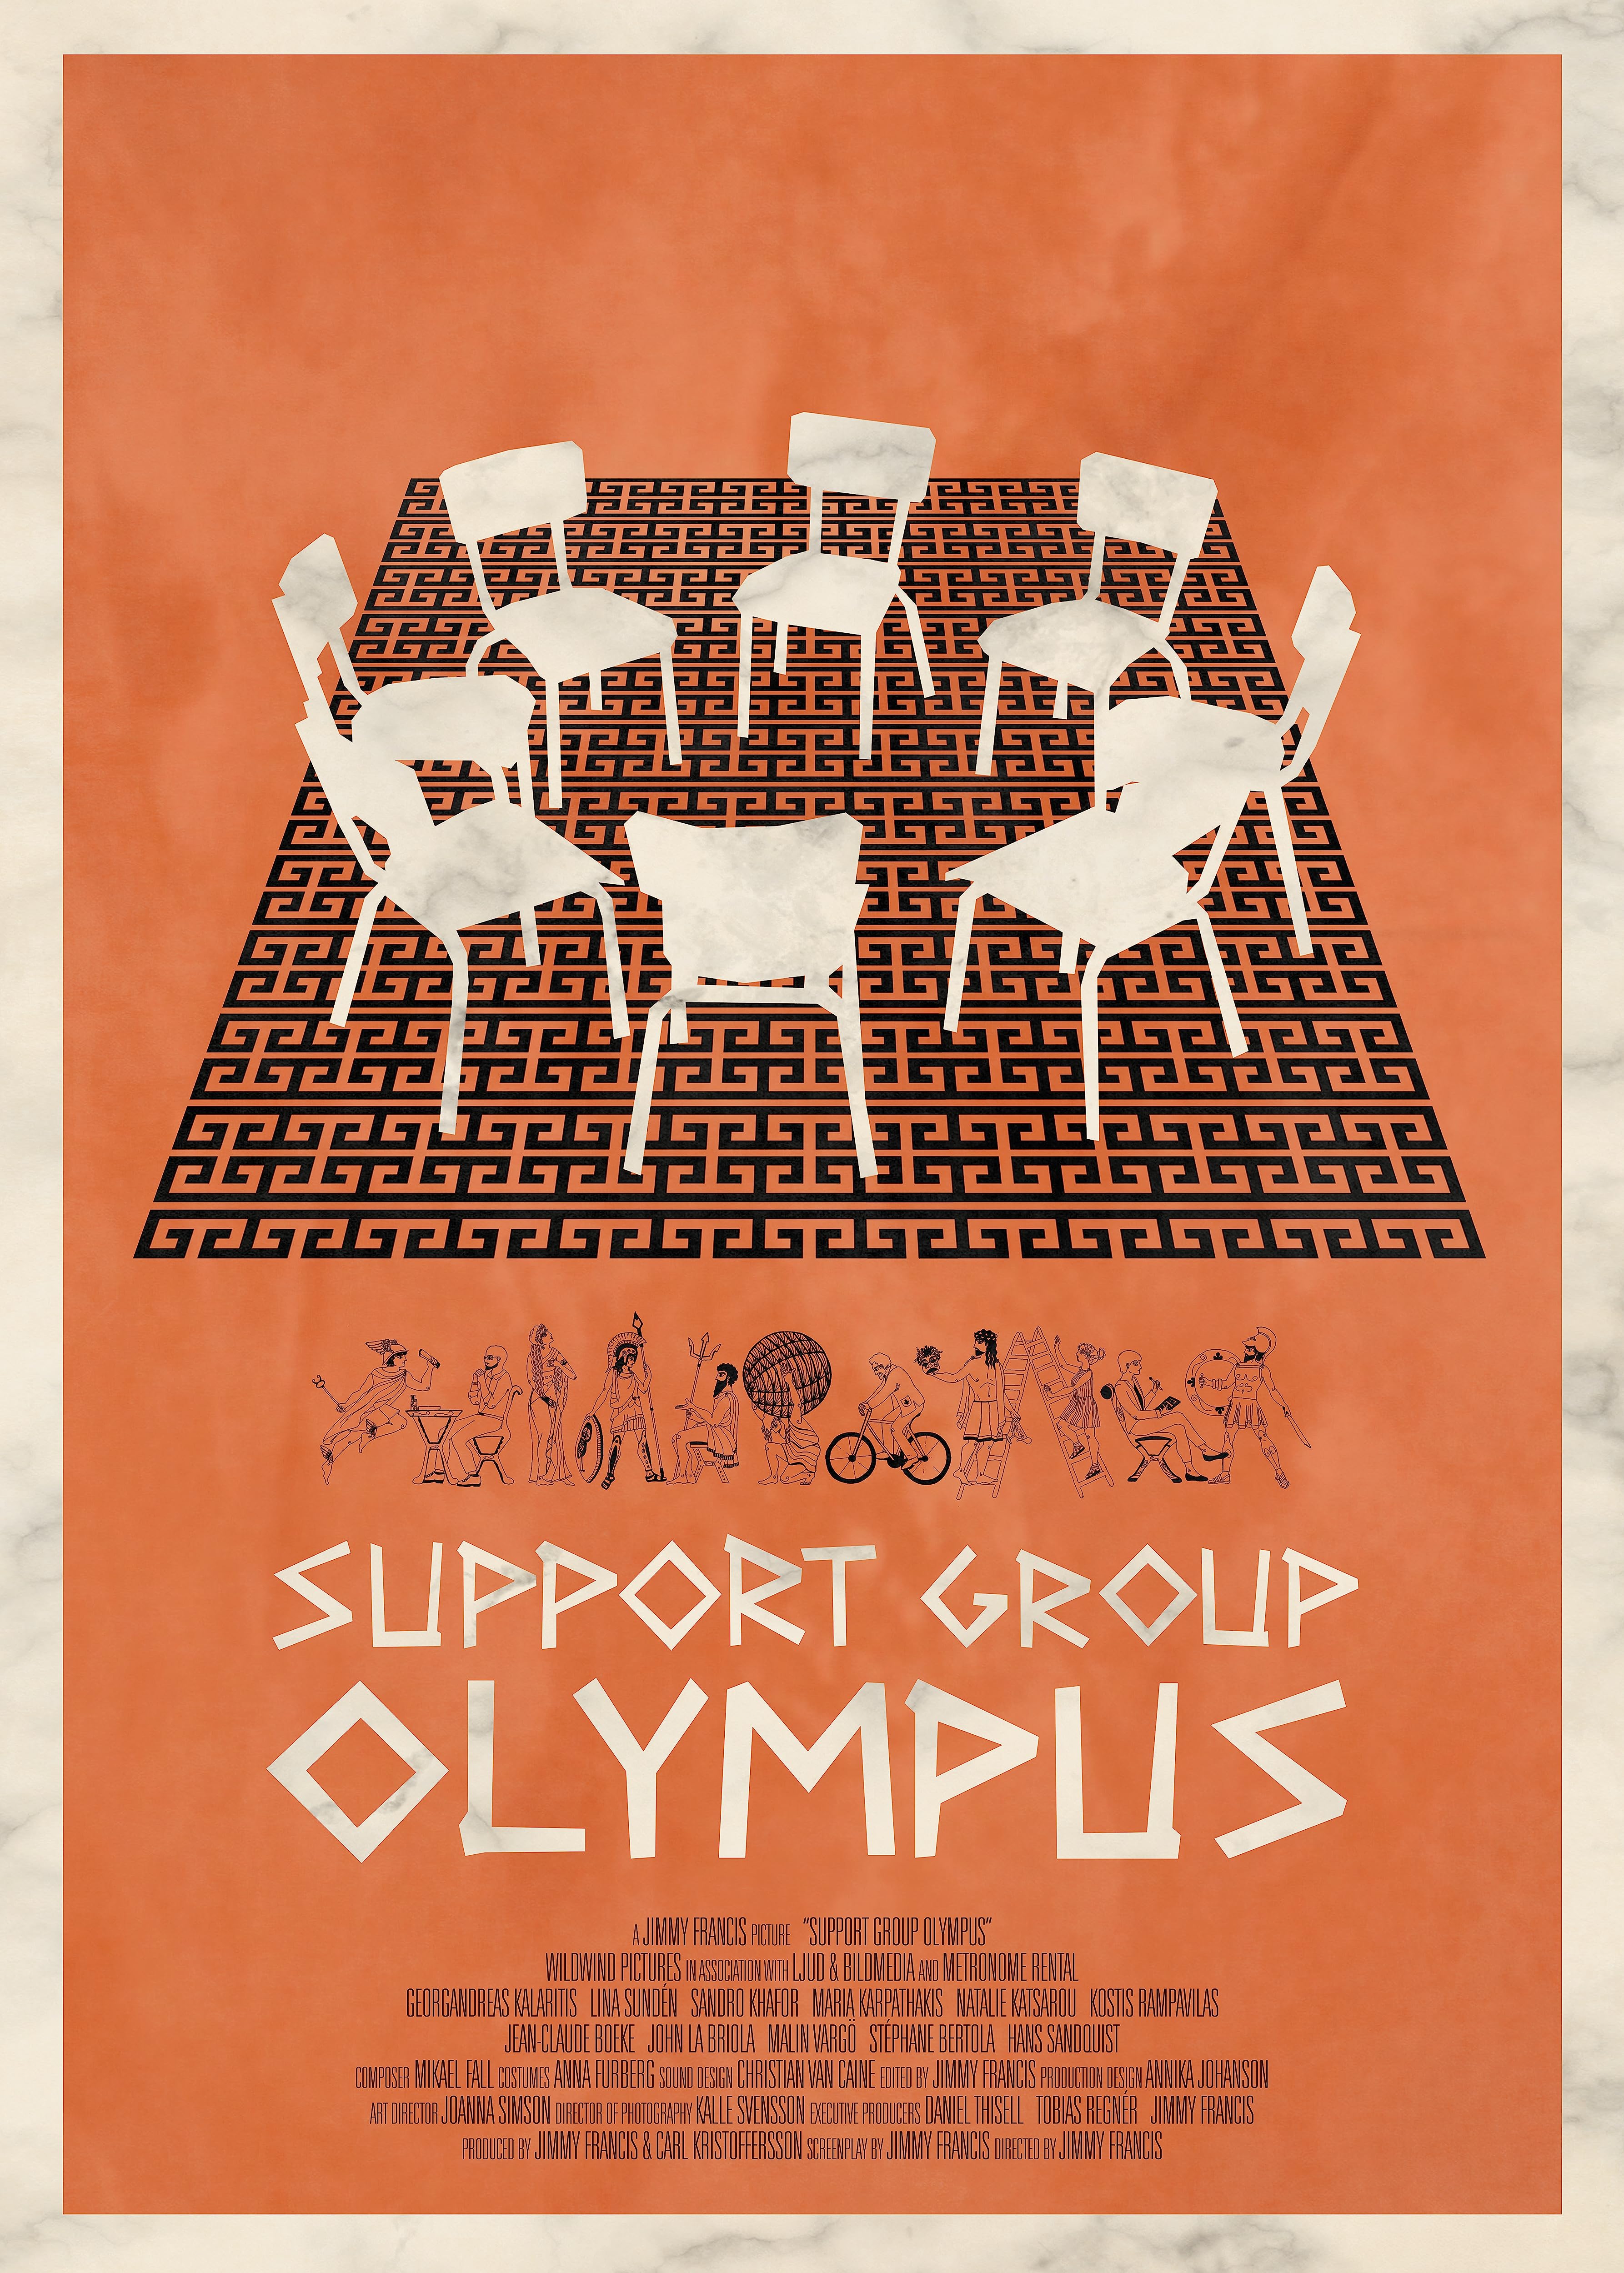  Группа поддержки Олимпа 